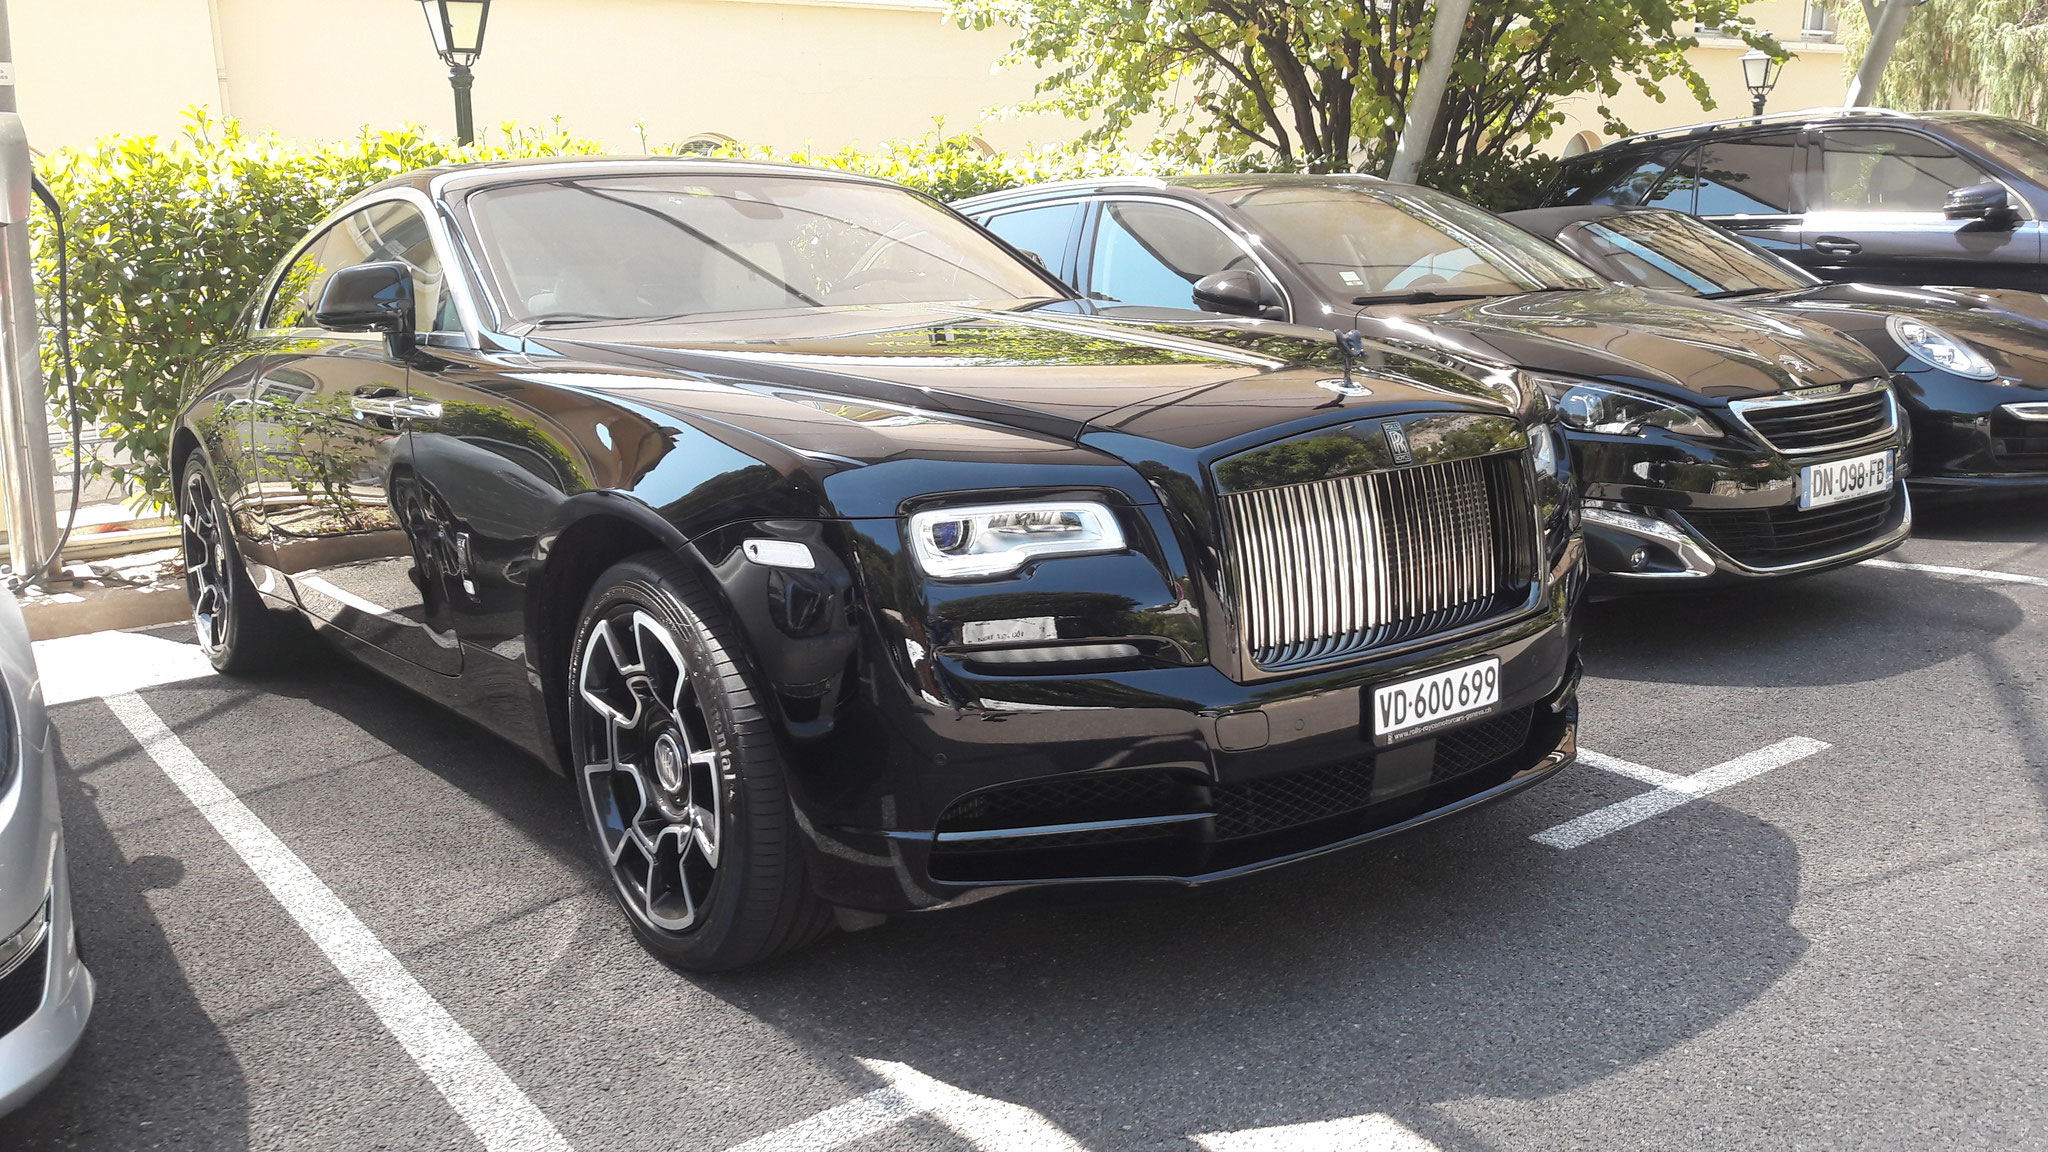 Rolls Royce Wraith Black Badge - VD-600699 (CH)